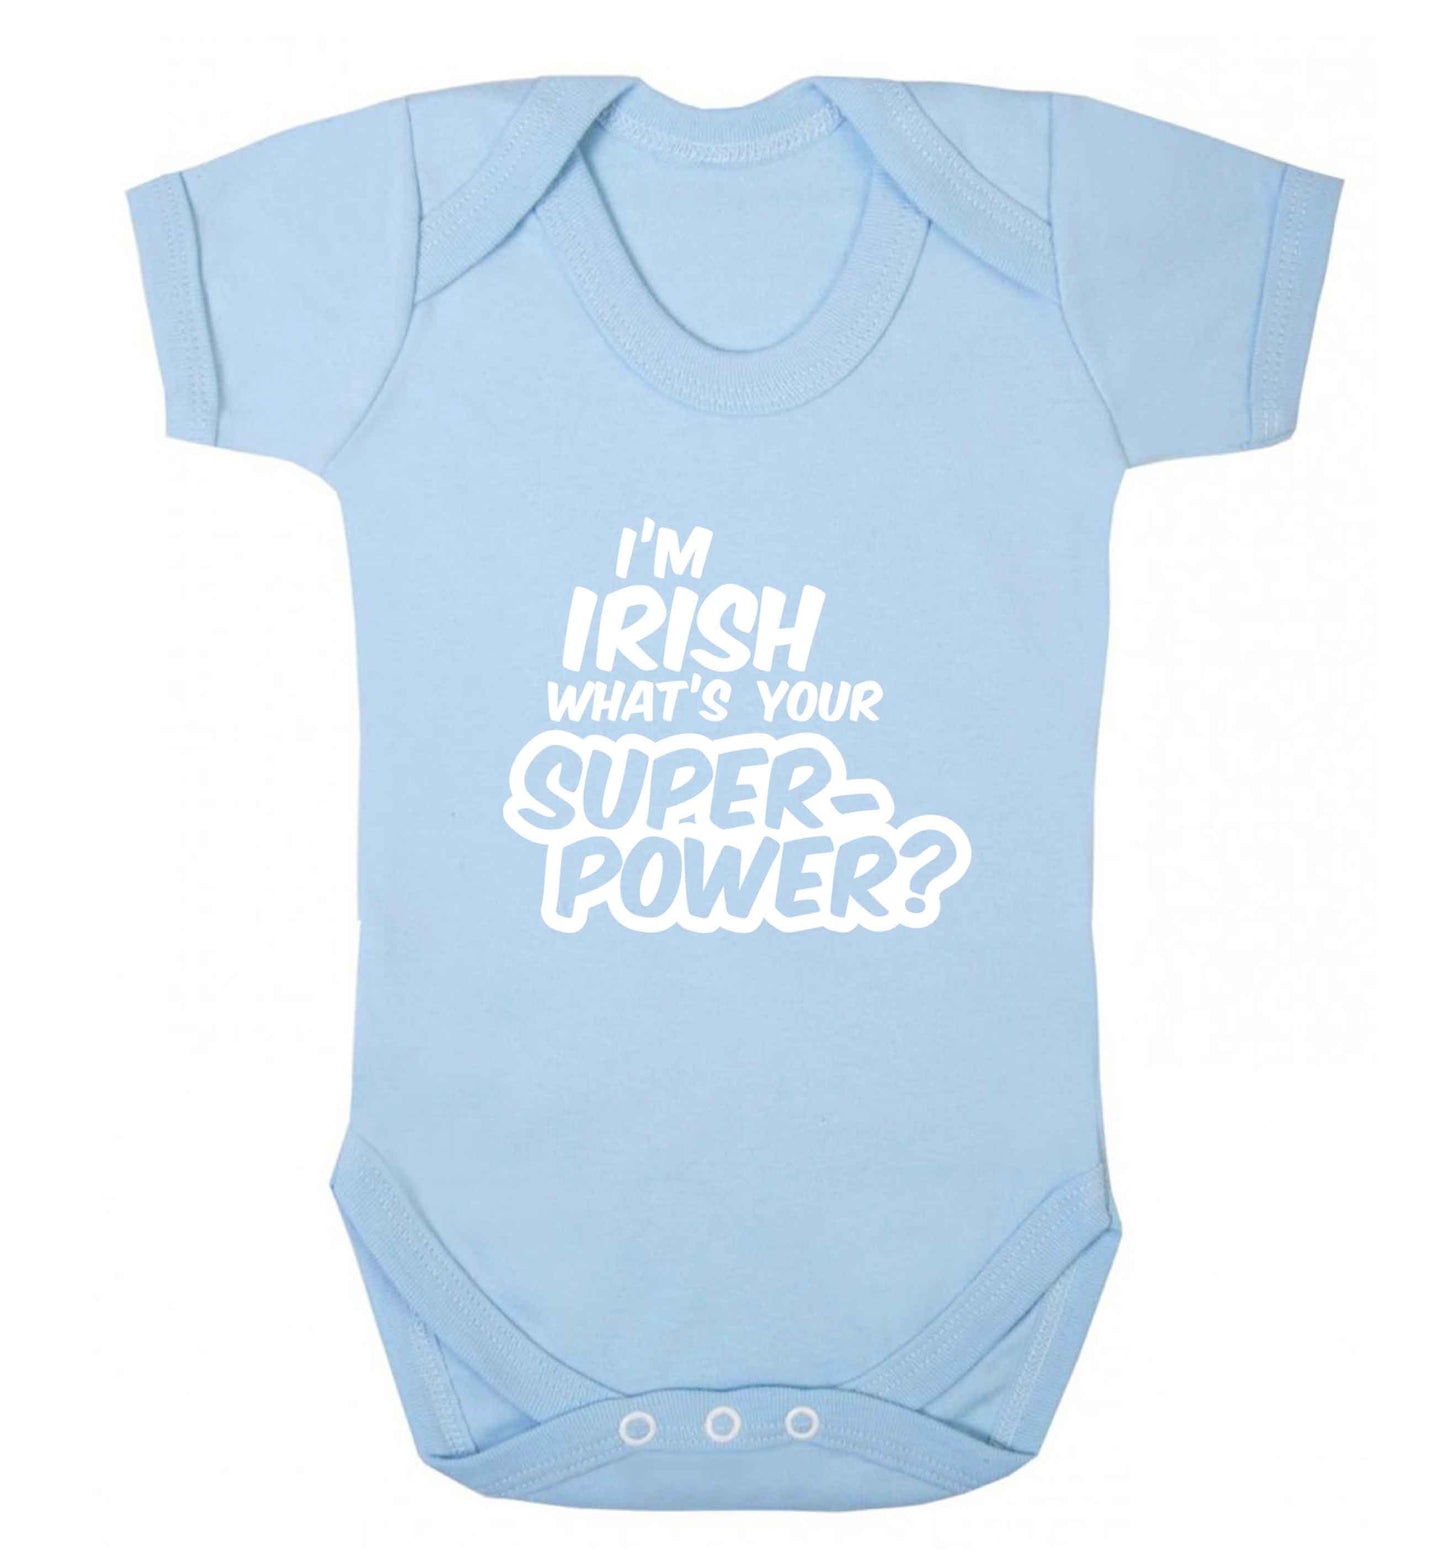 I'm Irish what's your superpower? baby vest pale blue 18-24 months